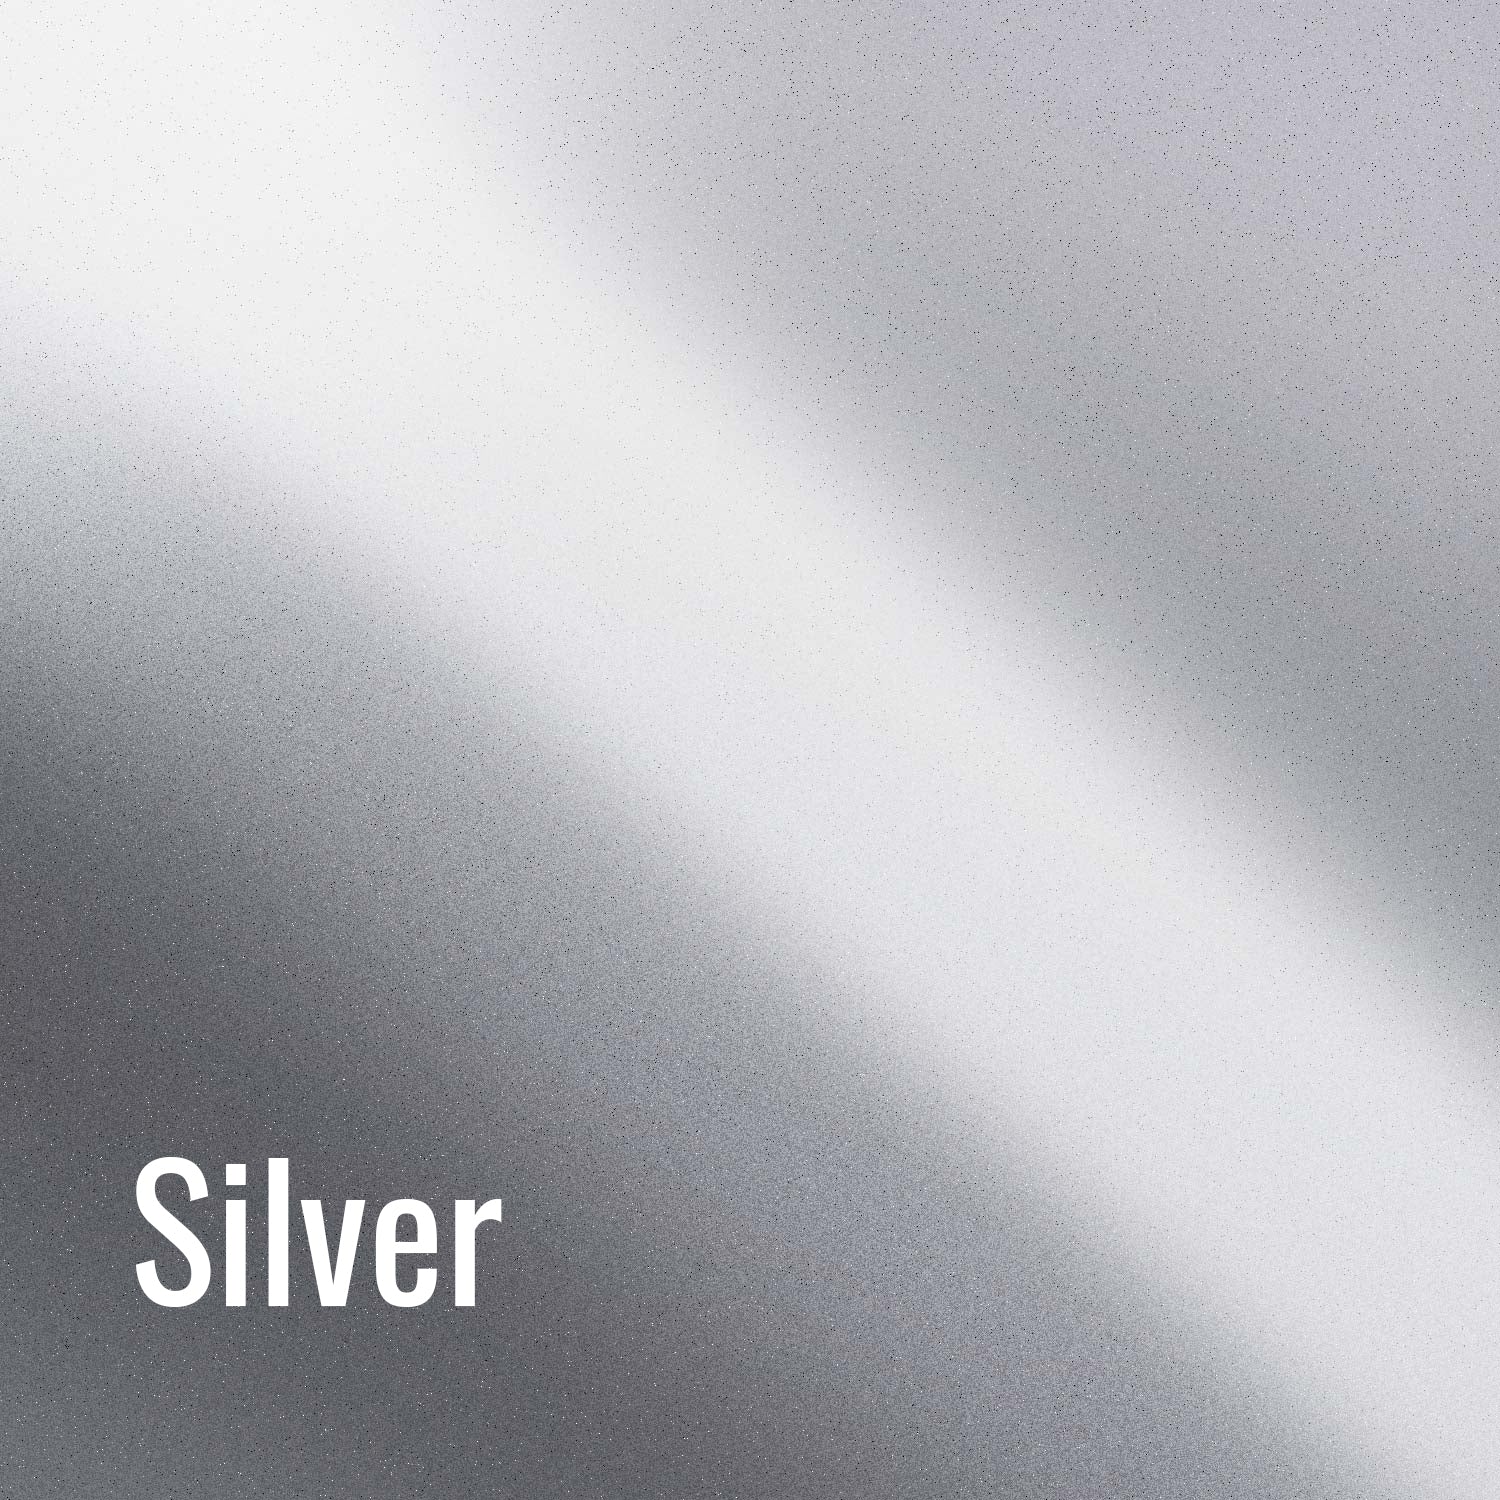 reflect silver